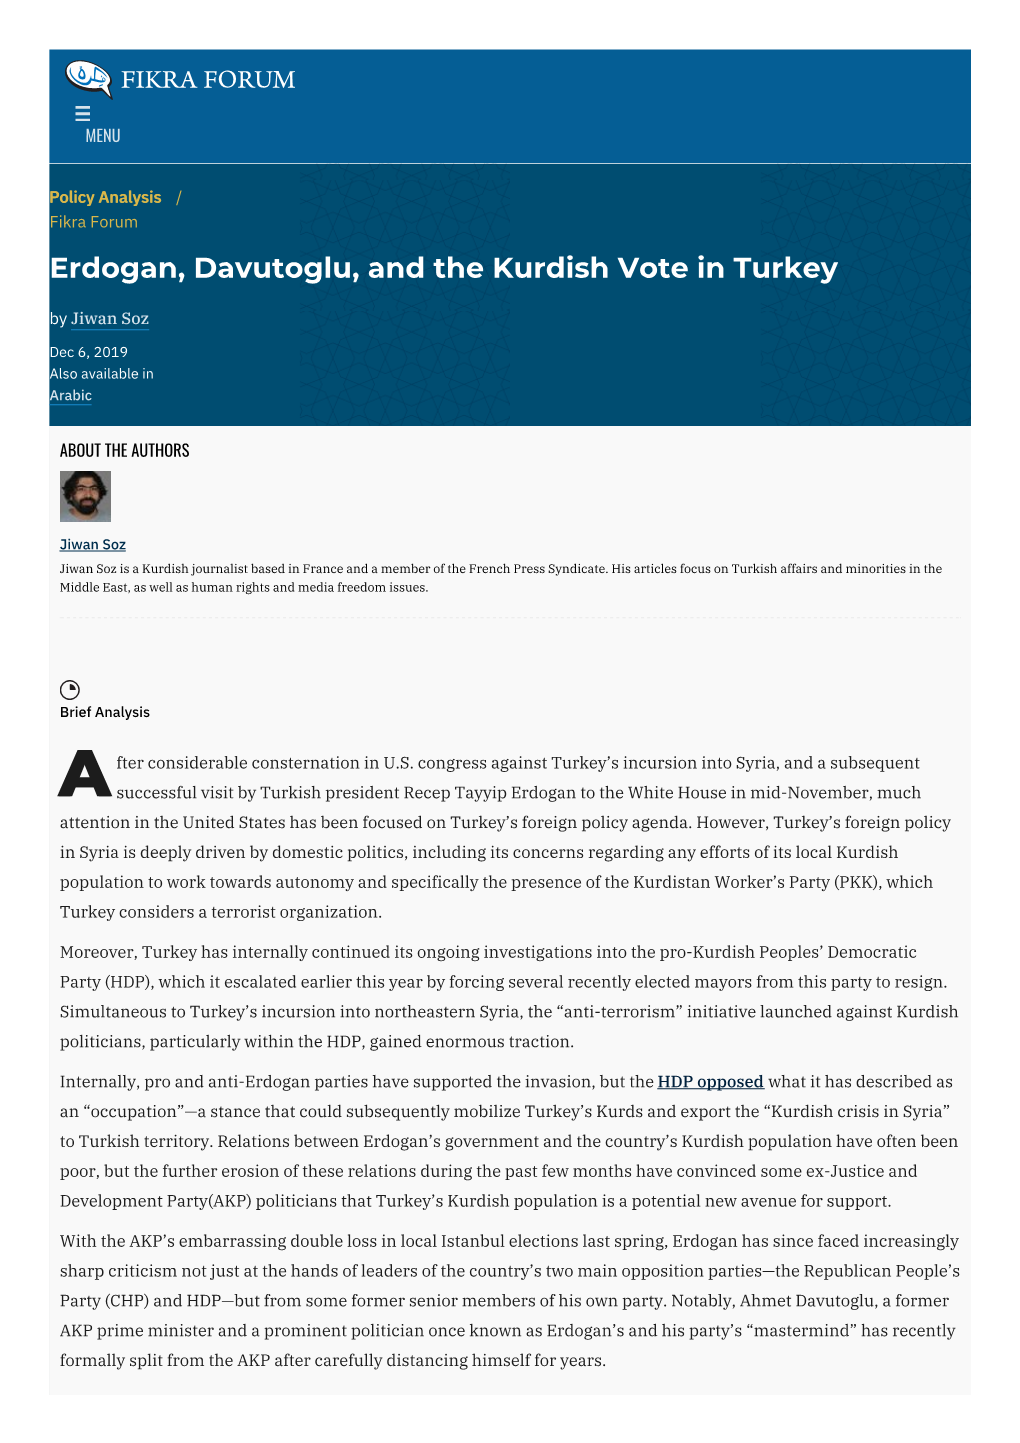 Erdogan, Davutoglu, and the Kurdish Vote in Turkey by Jiwan Soz